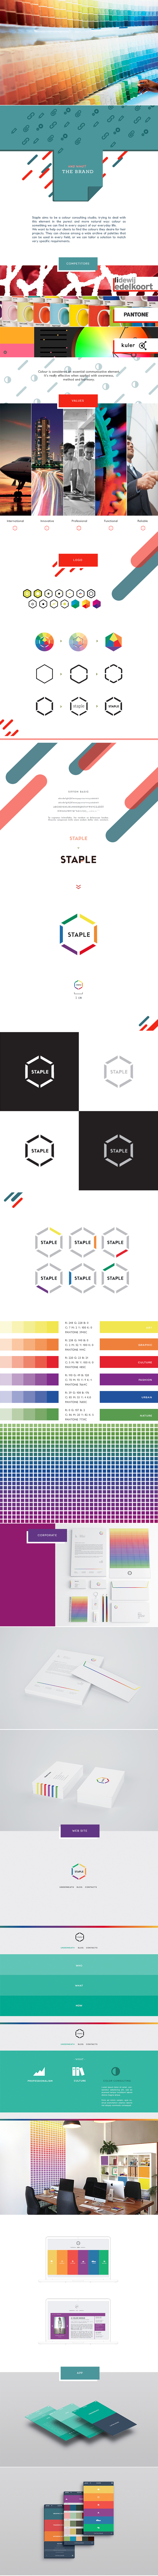 Adobe Portfolio colour color staple thesis palette pantone Stacks logo Park Consulting Goethe teory itten Method magazine